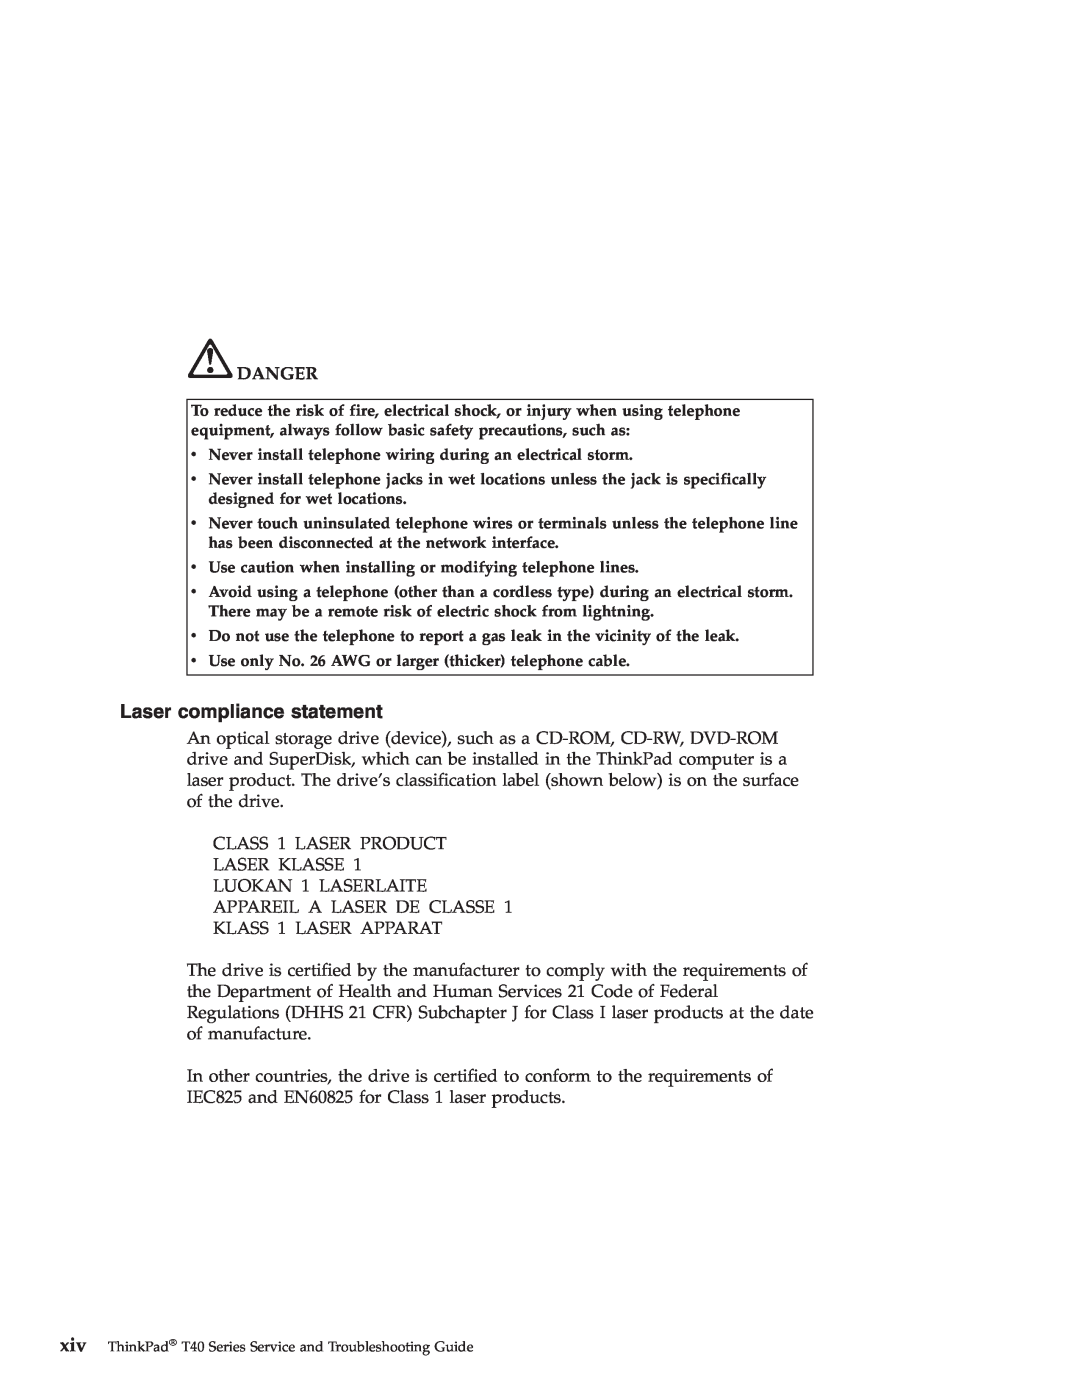 Lenovo T40 manual Laser compliance statement, Danger 